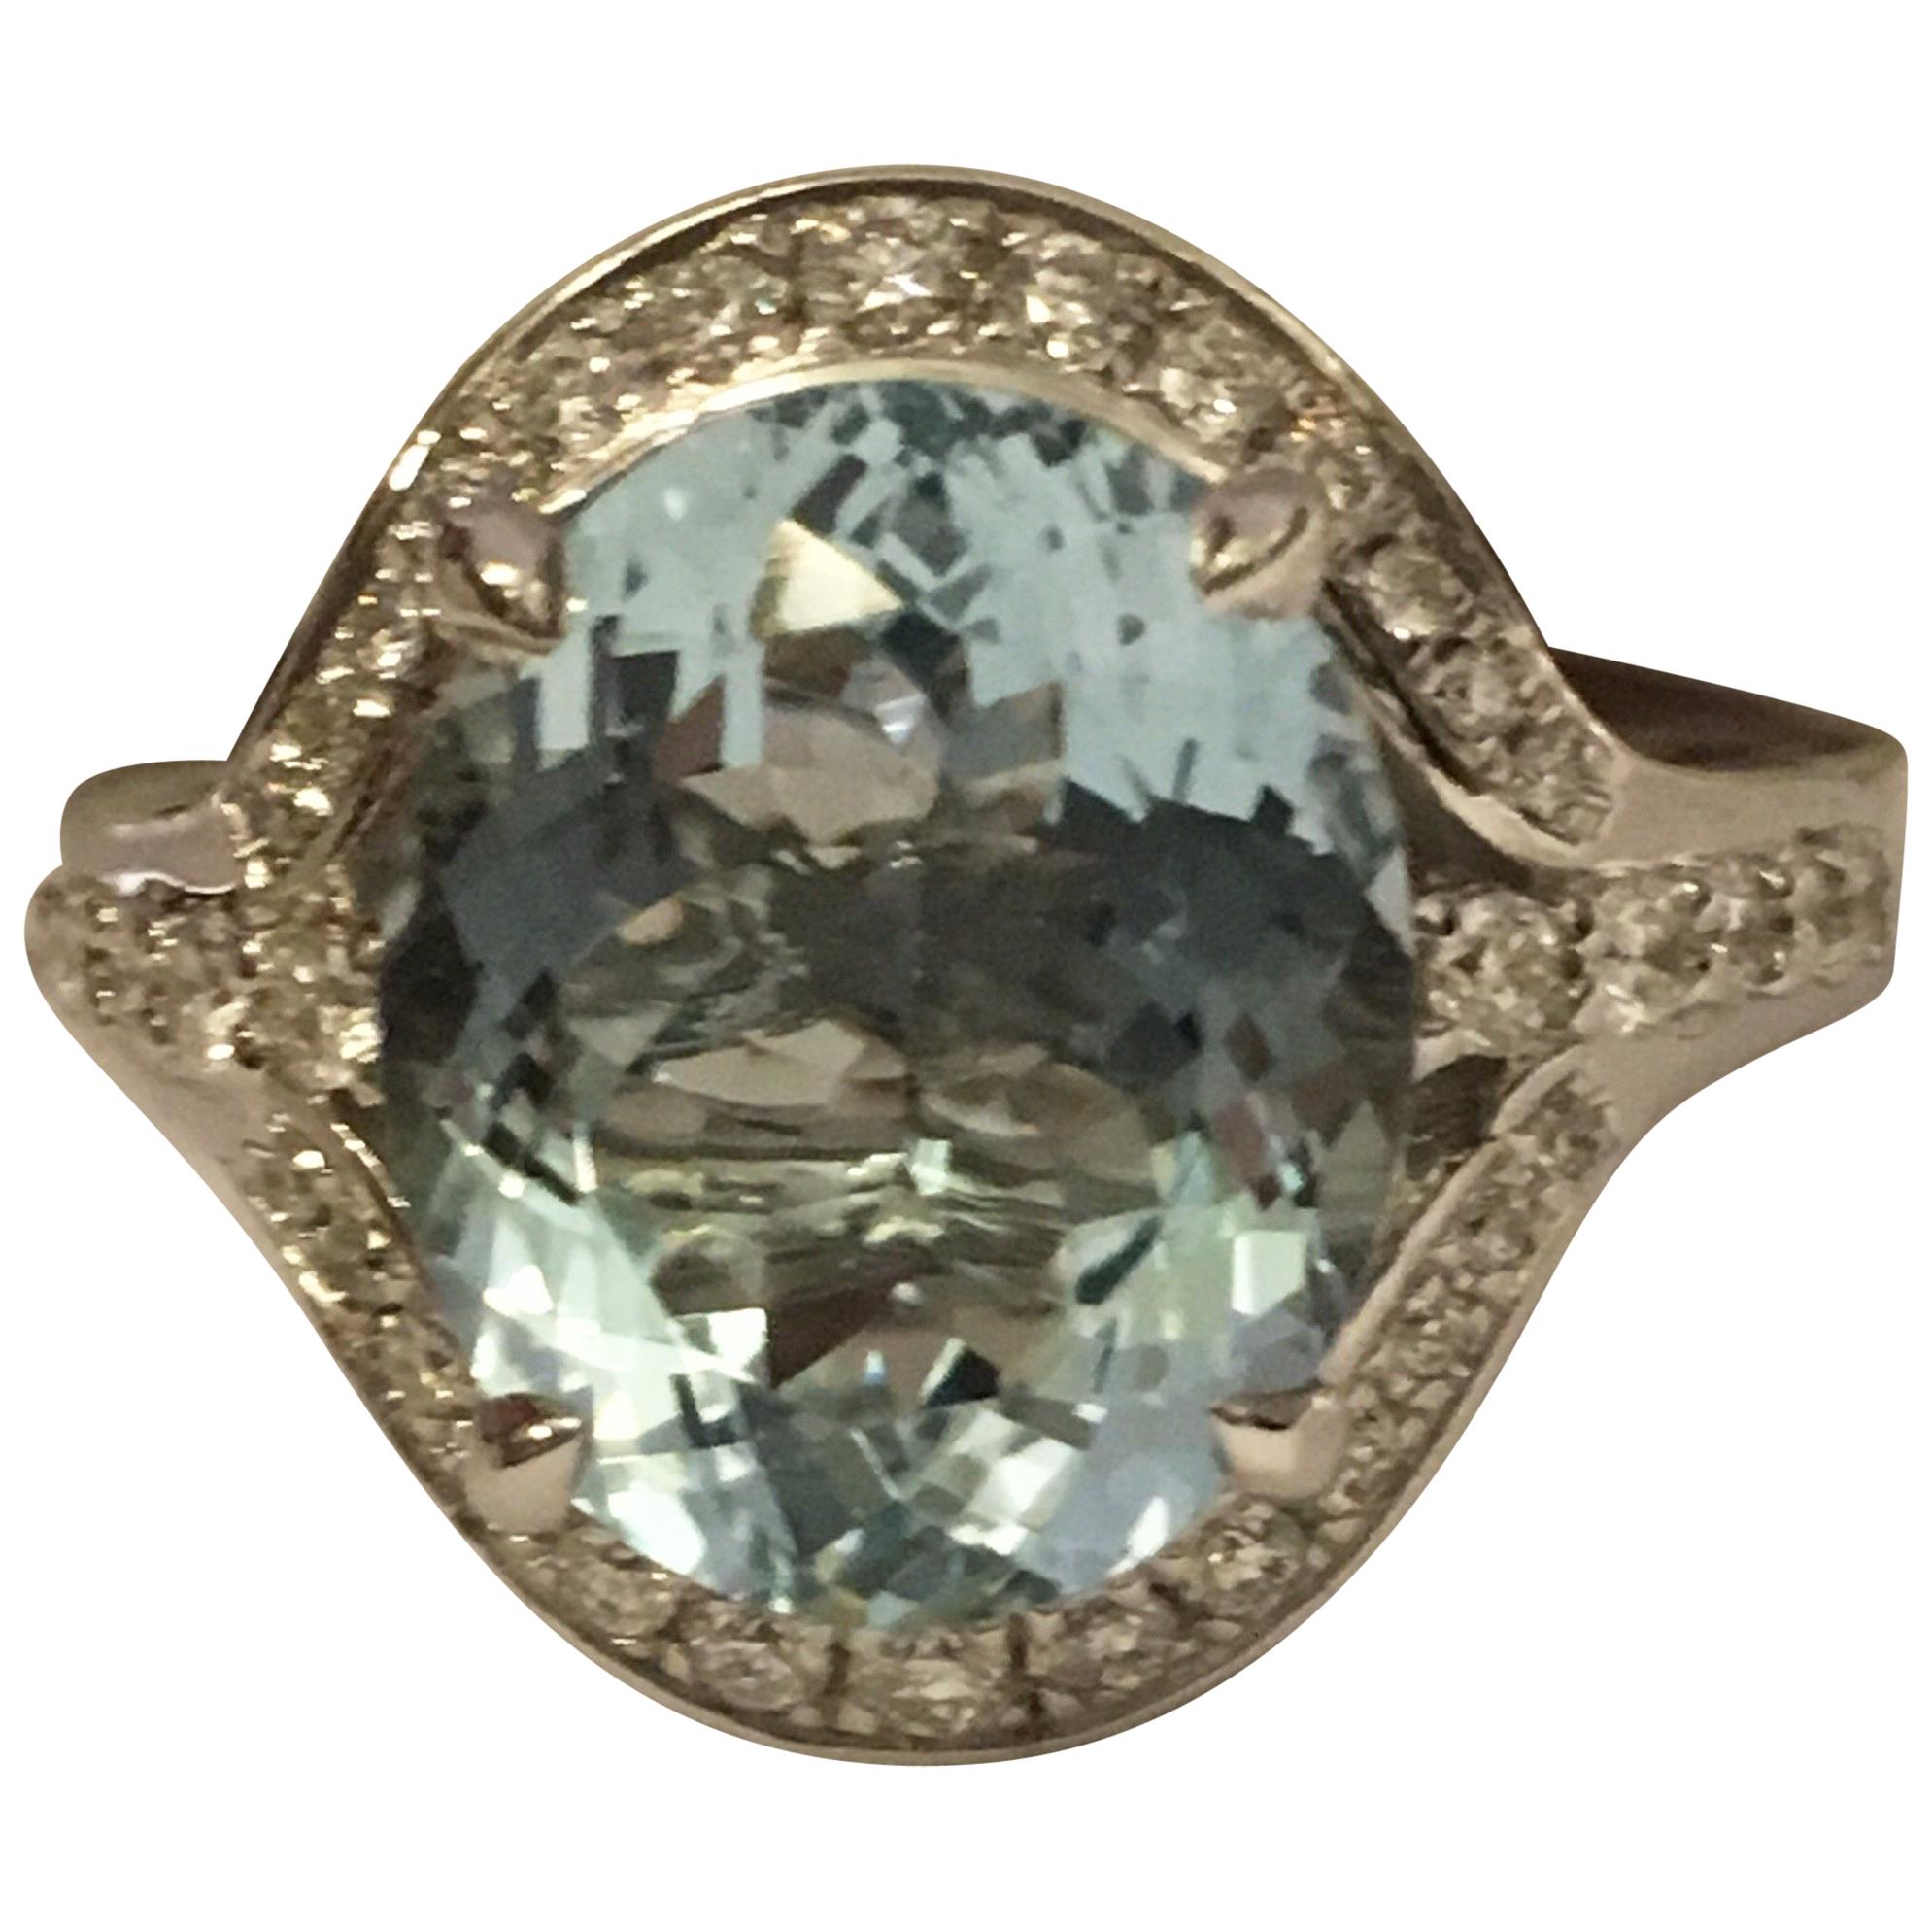 Oval Aquamarine and Diamond Ring Set in 18 Karat White Gold